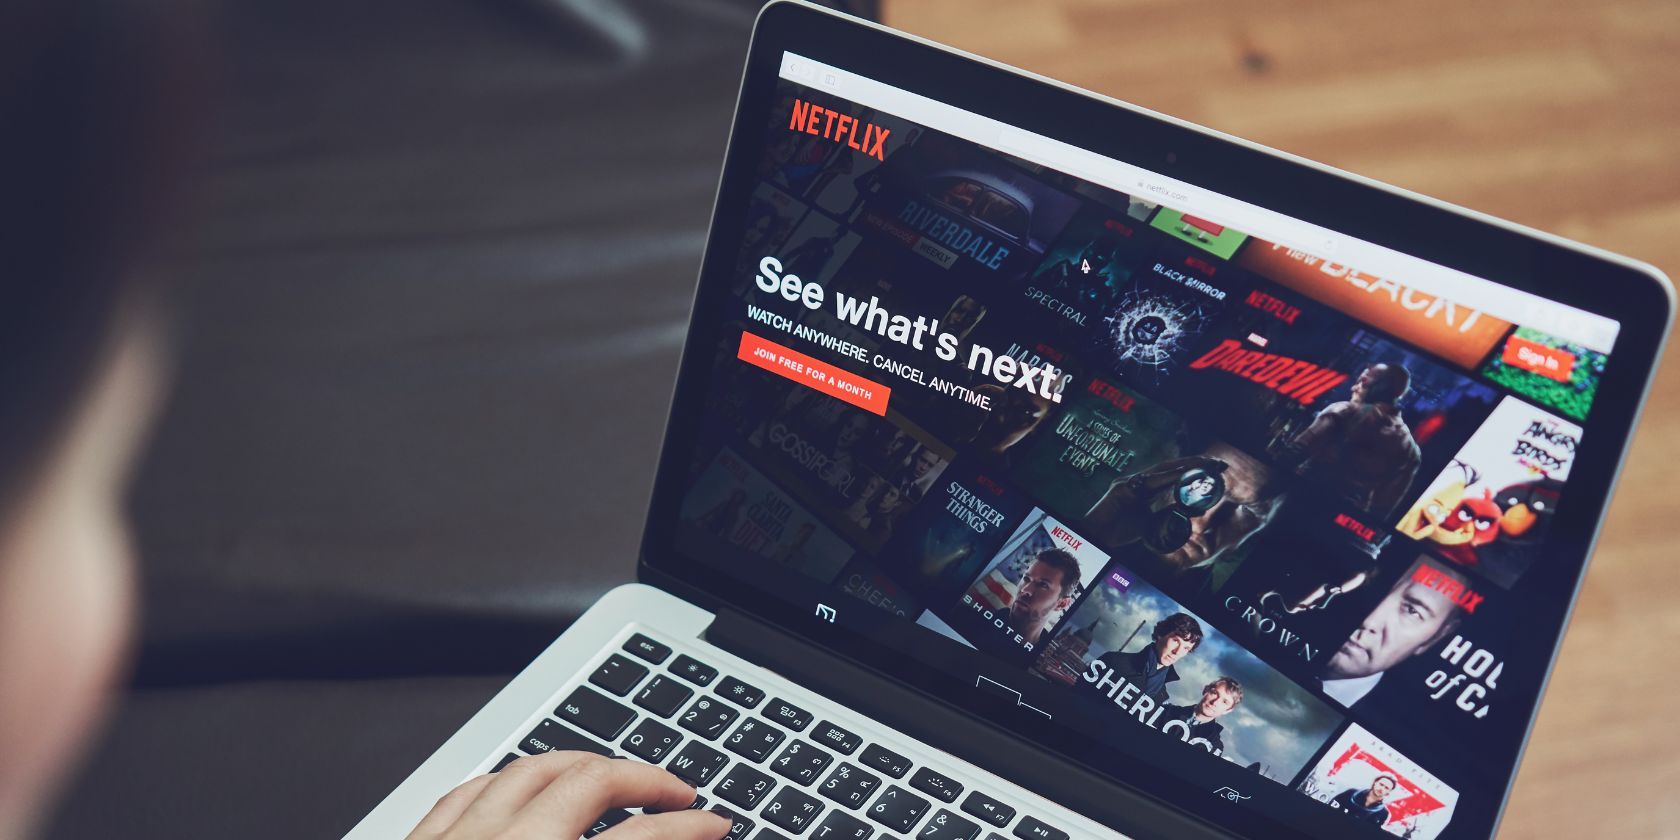 The Netflix website on a laptop